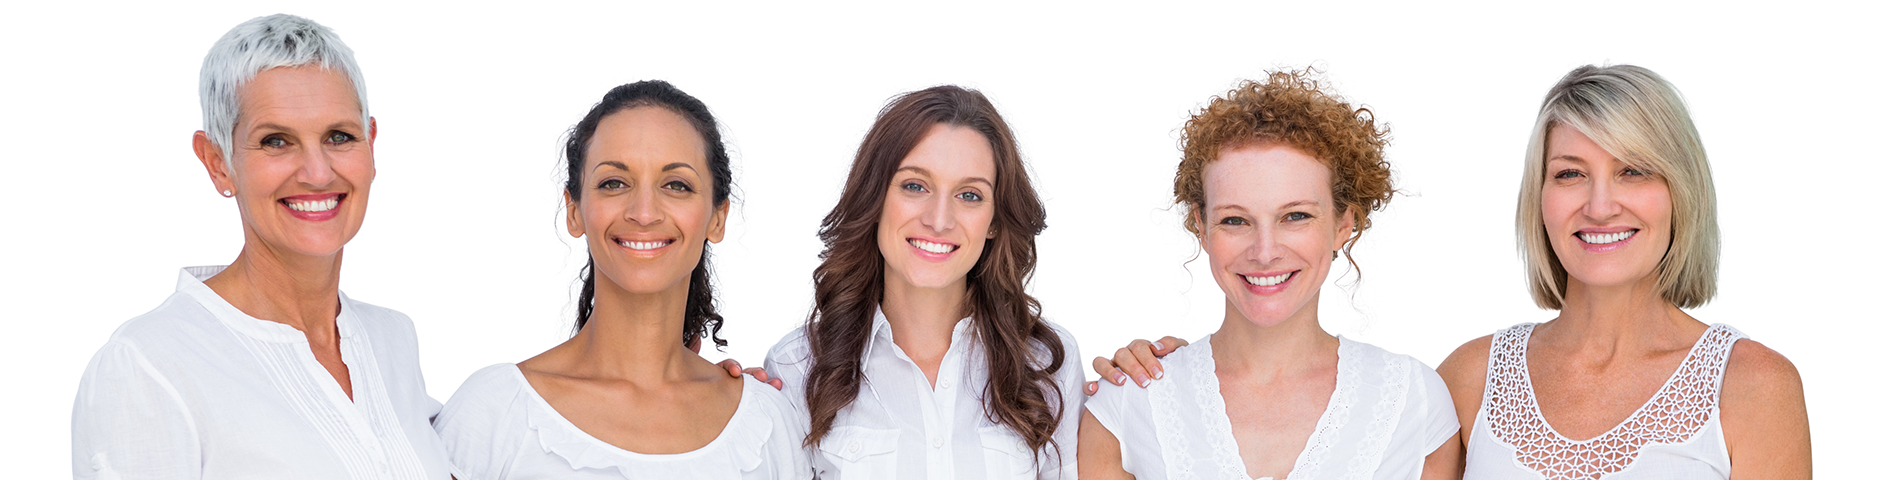 mammography women in white